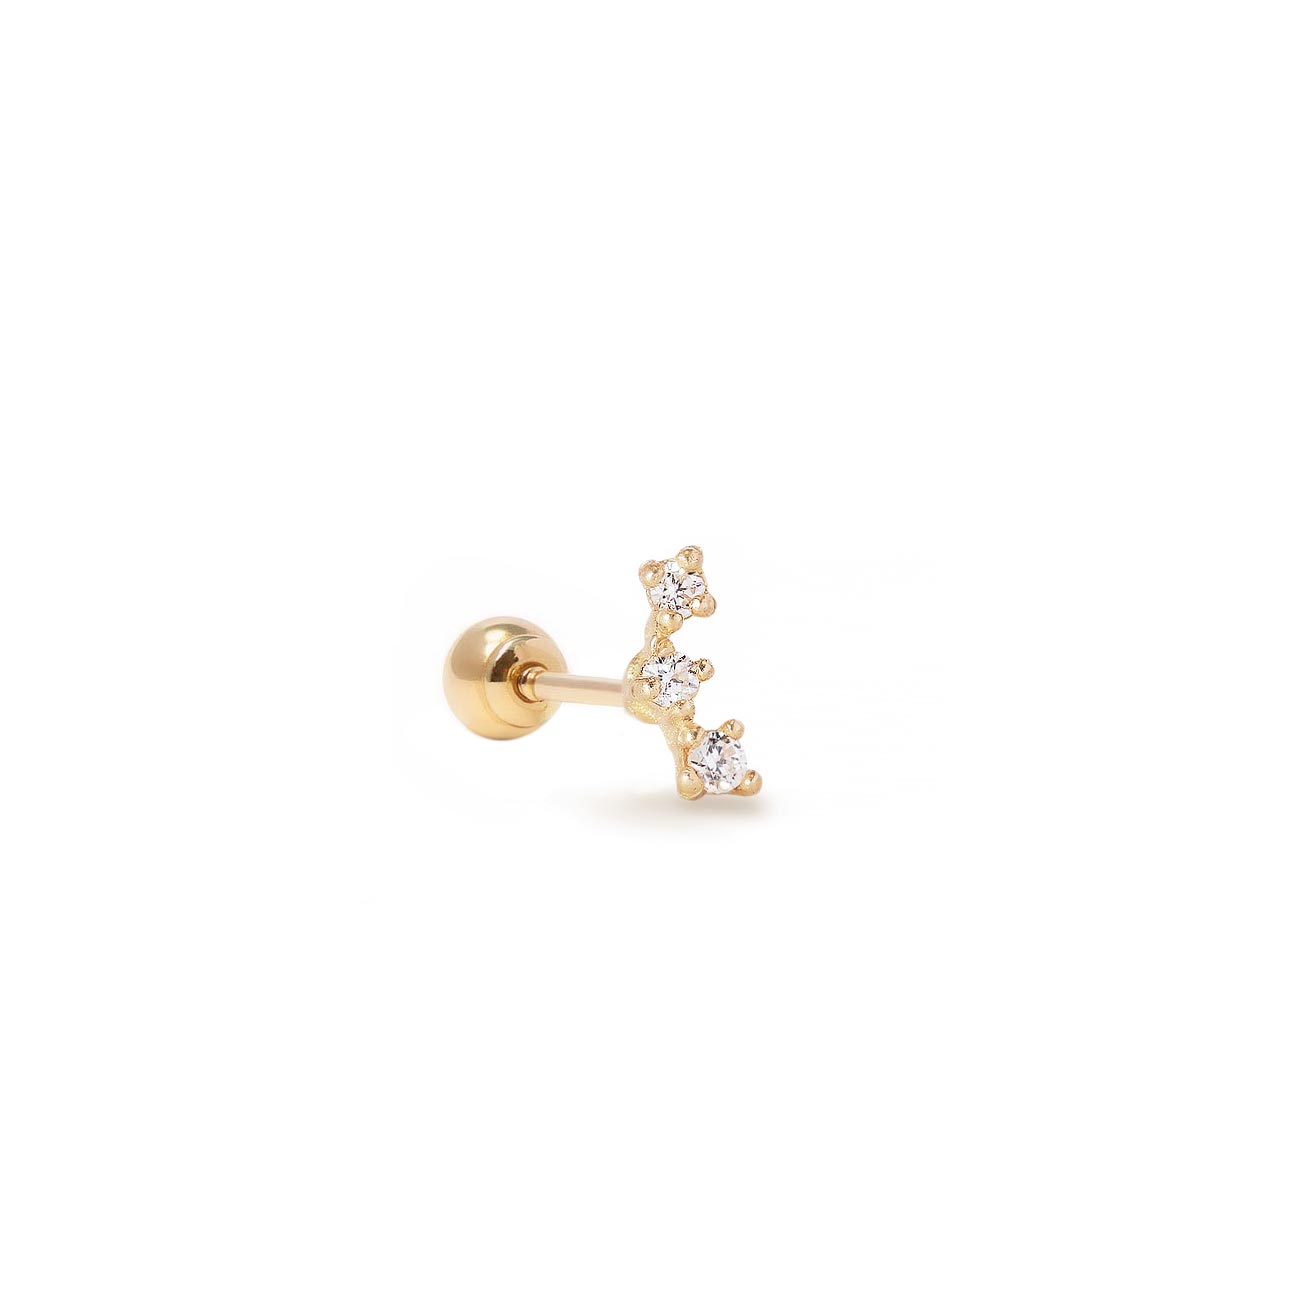 U-Shaped Earring Claw Gold and Silver Ear Hook Clip Earrings Irregular Crystal Stud Earrings for Women